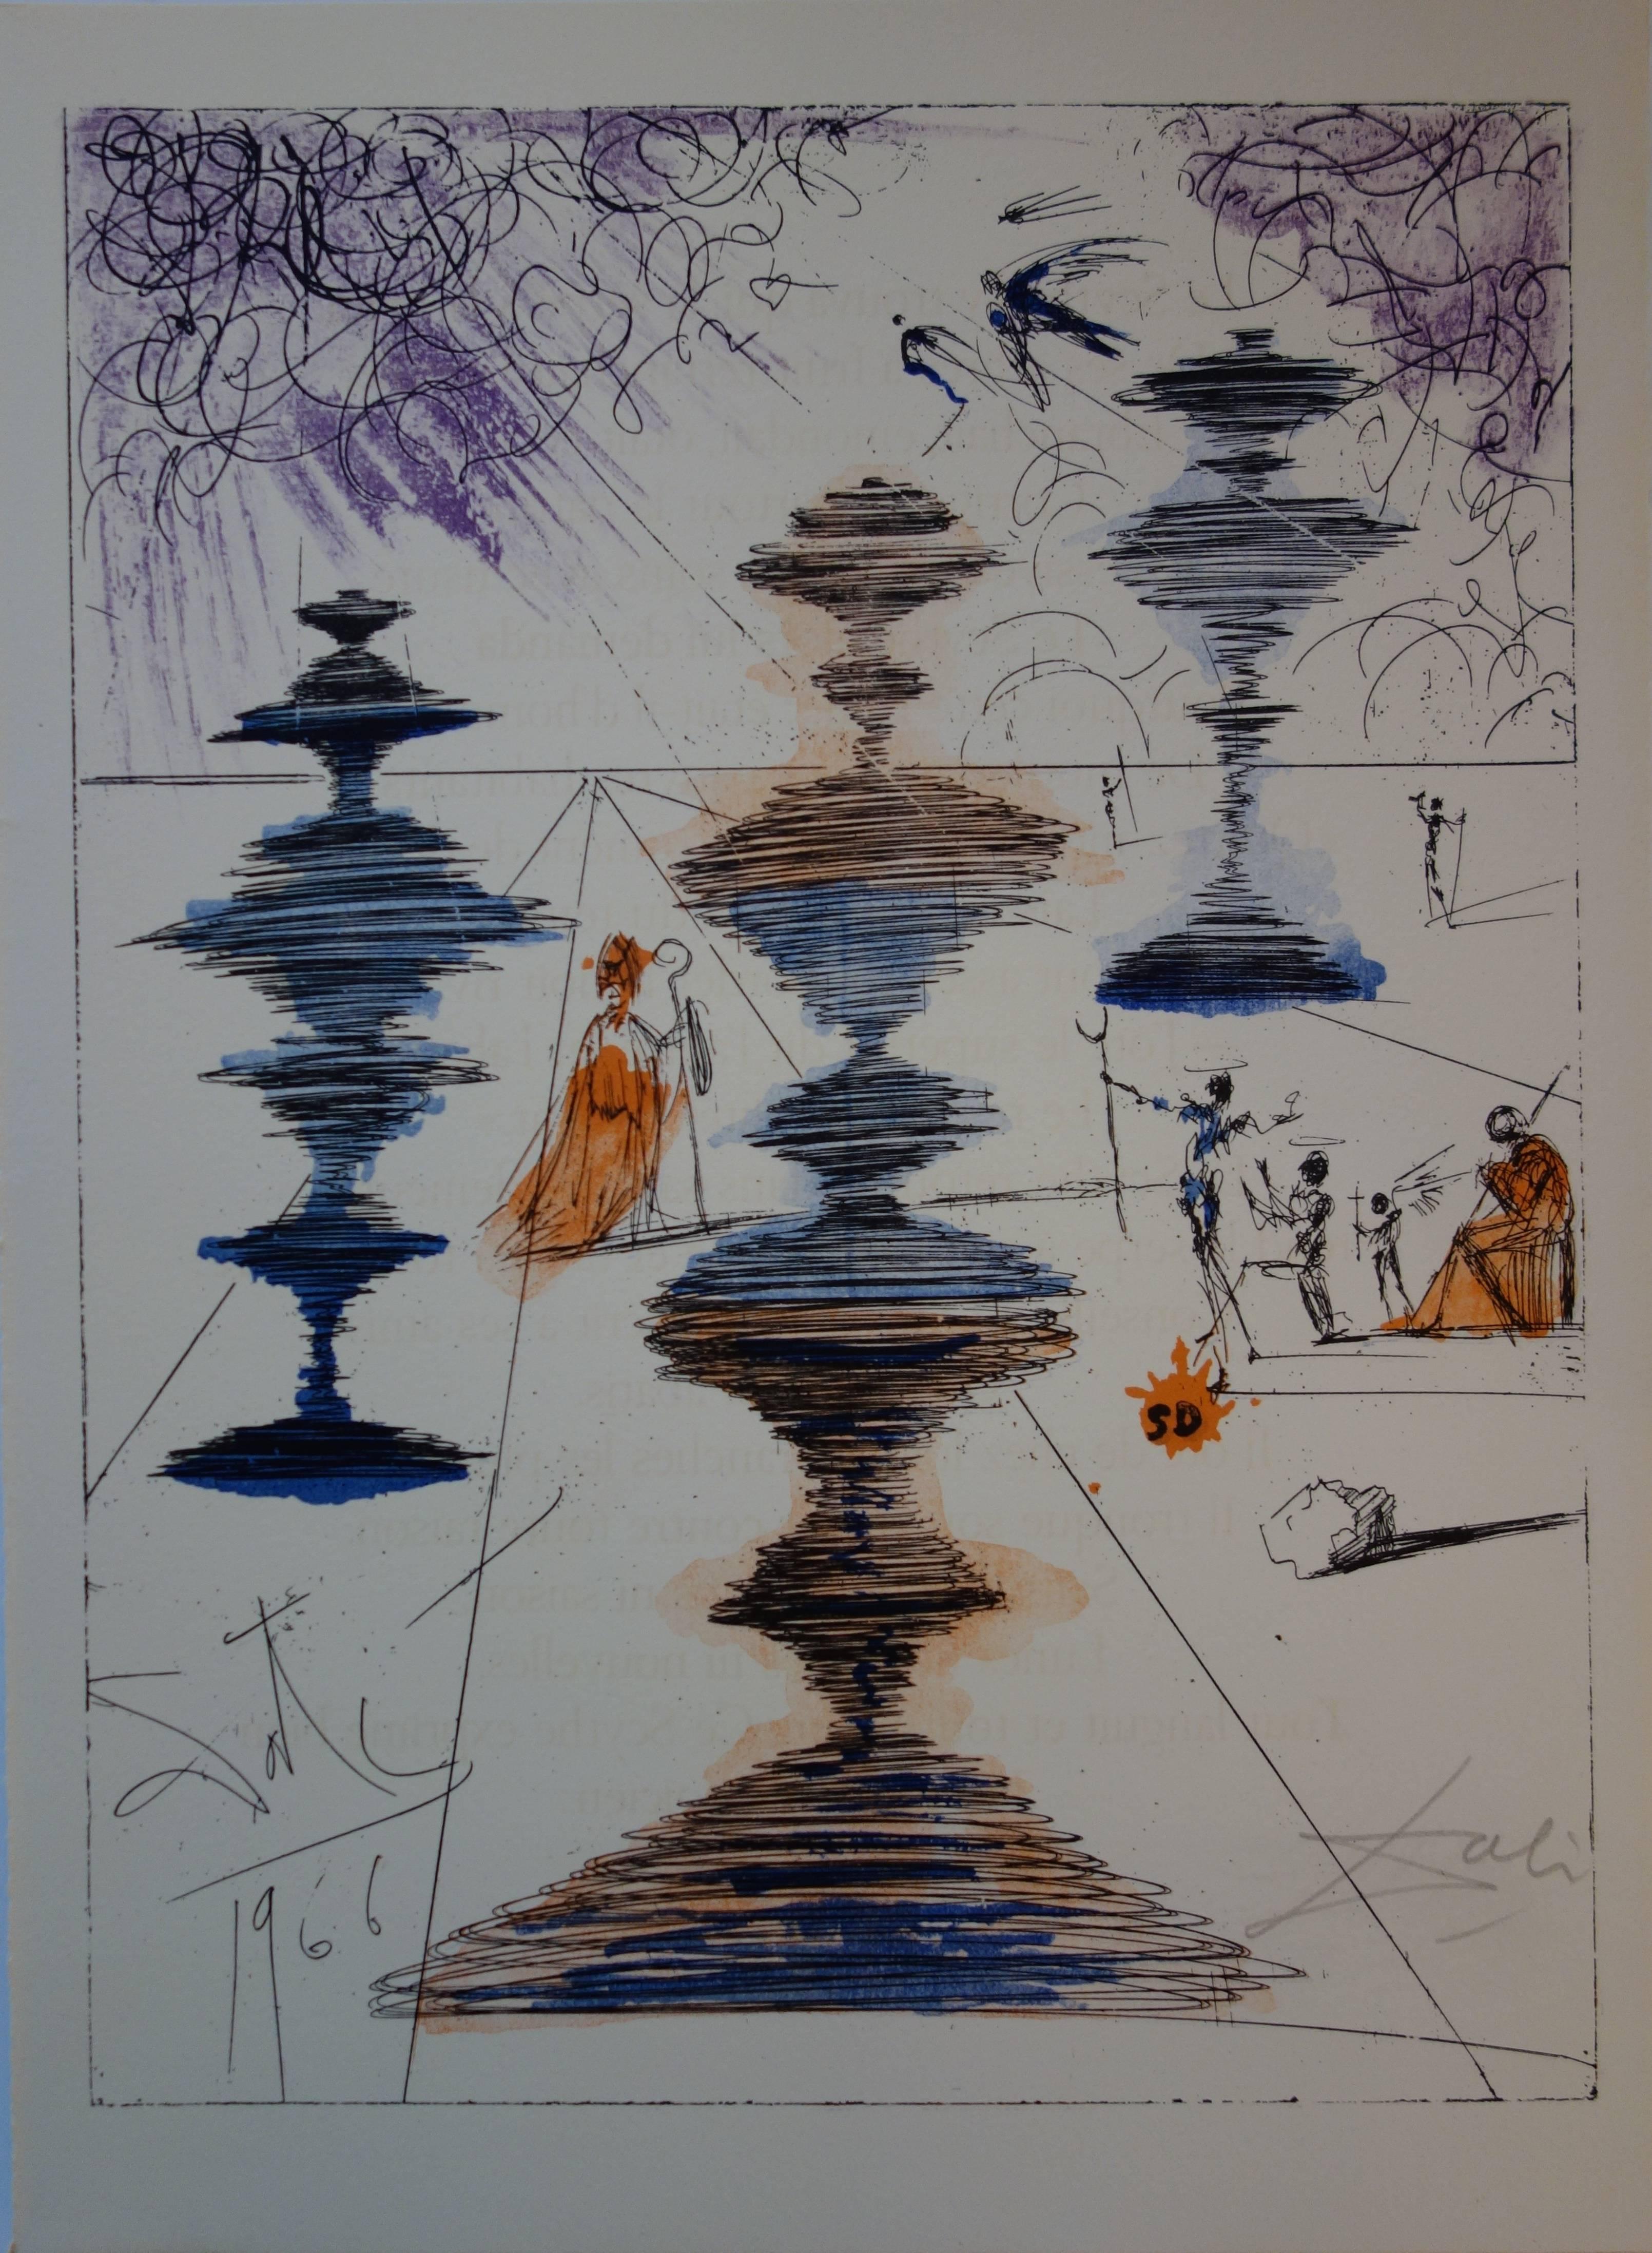 Salvador Dalí Figurative Print - The Scythe philosopher - Original Handsigned Lithograph - 1967